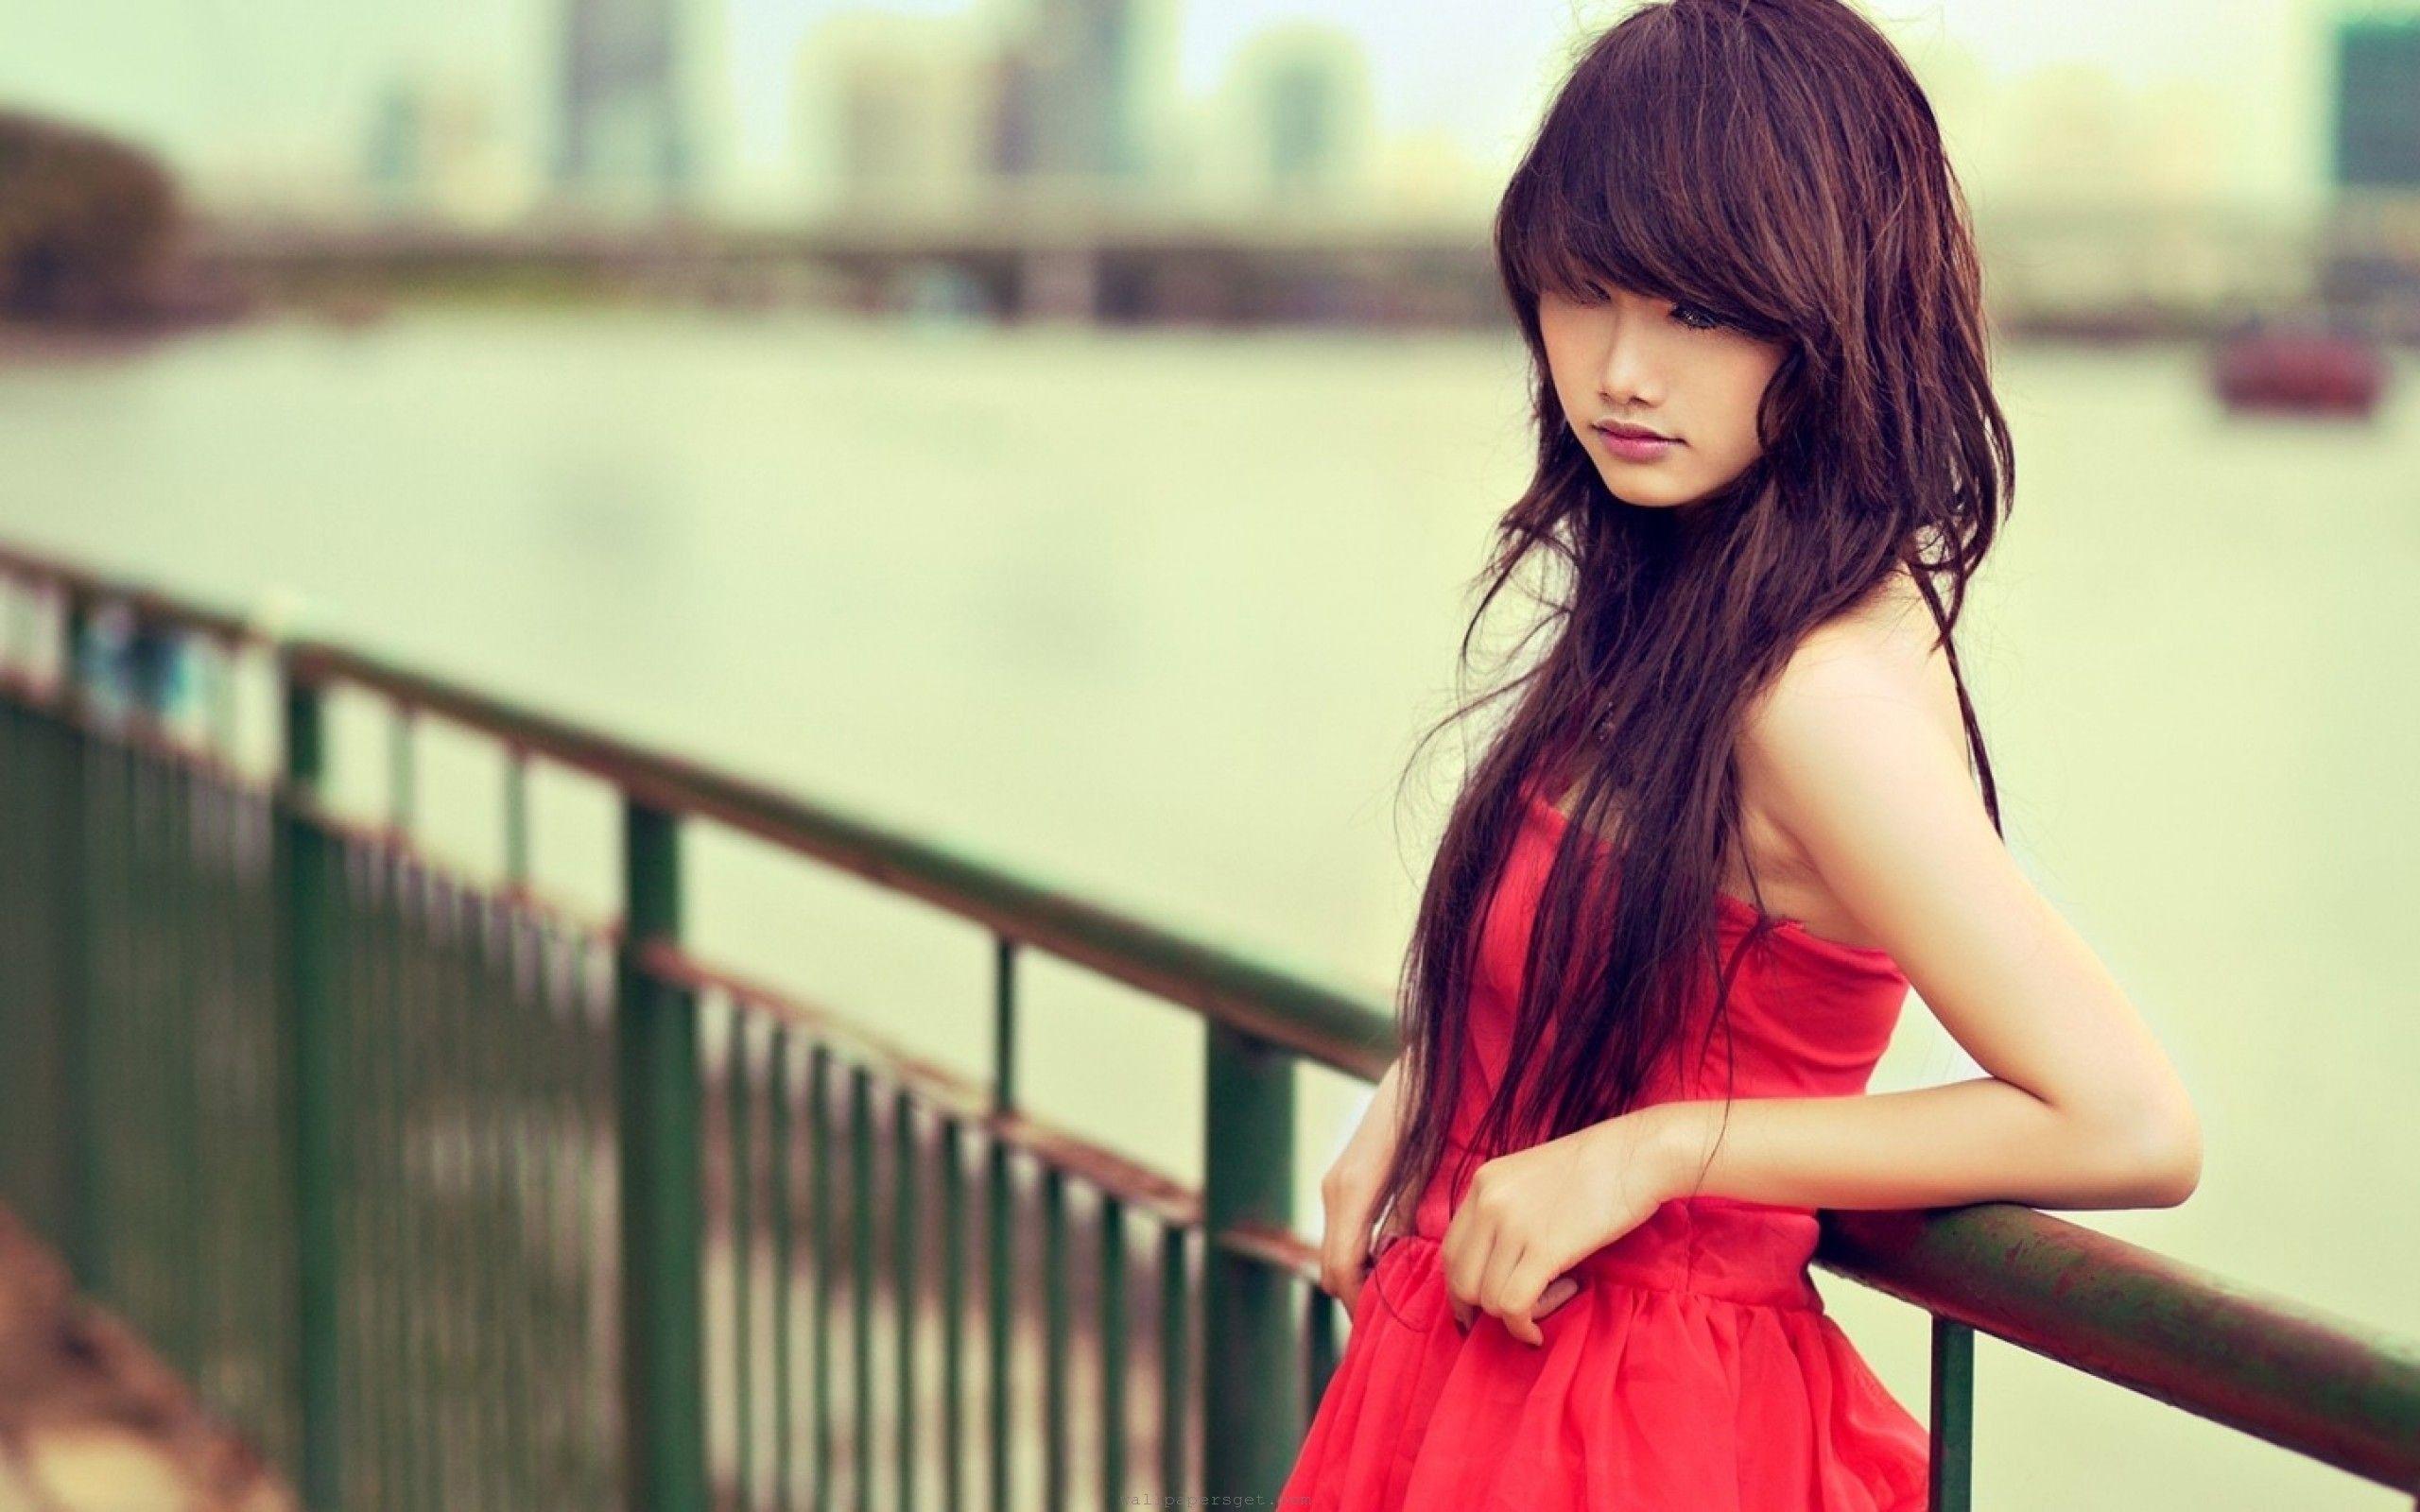 And Beautiful Asian Girls Wallpaper Full HD Free Download